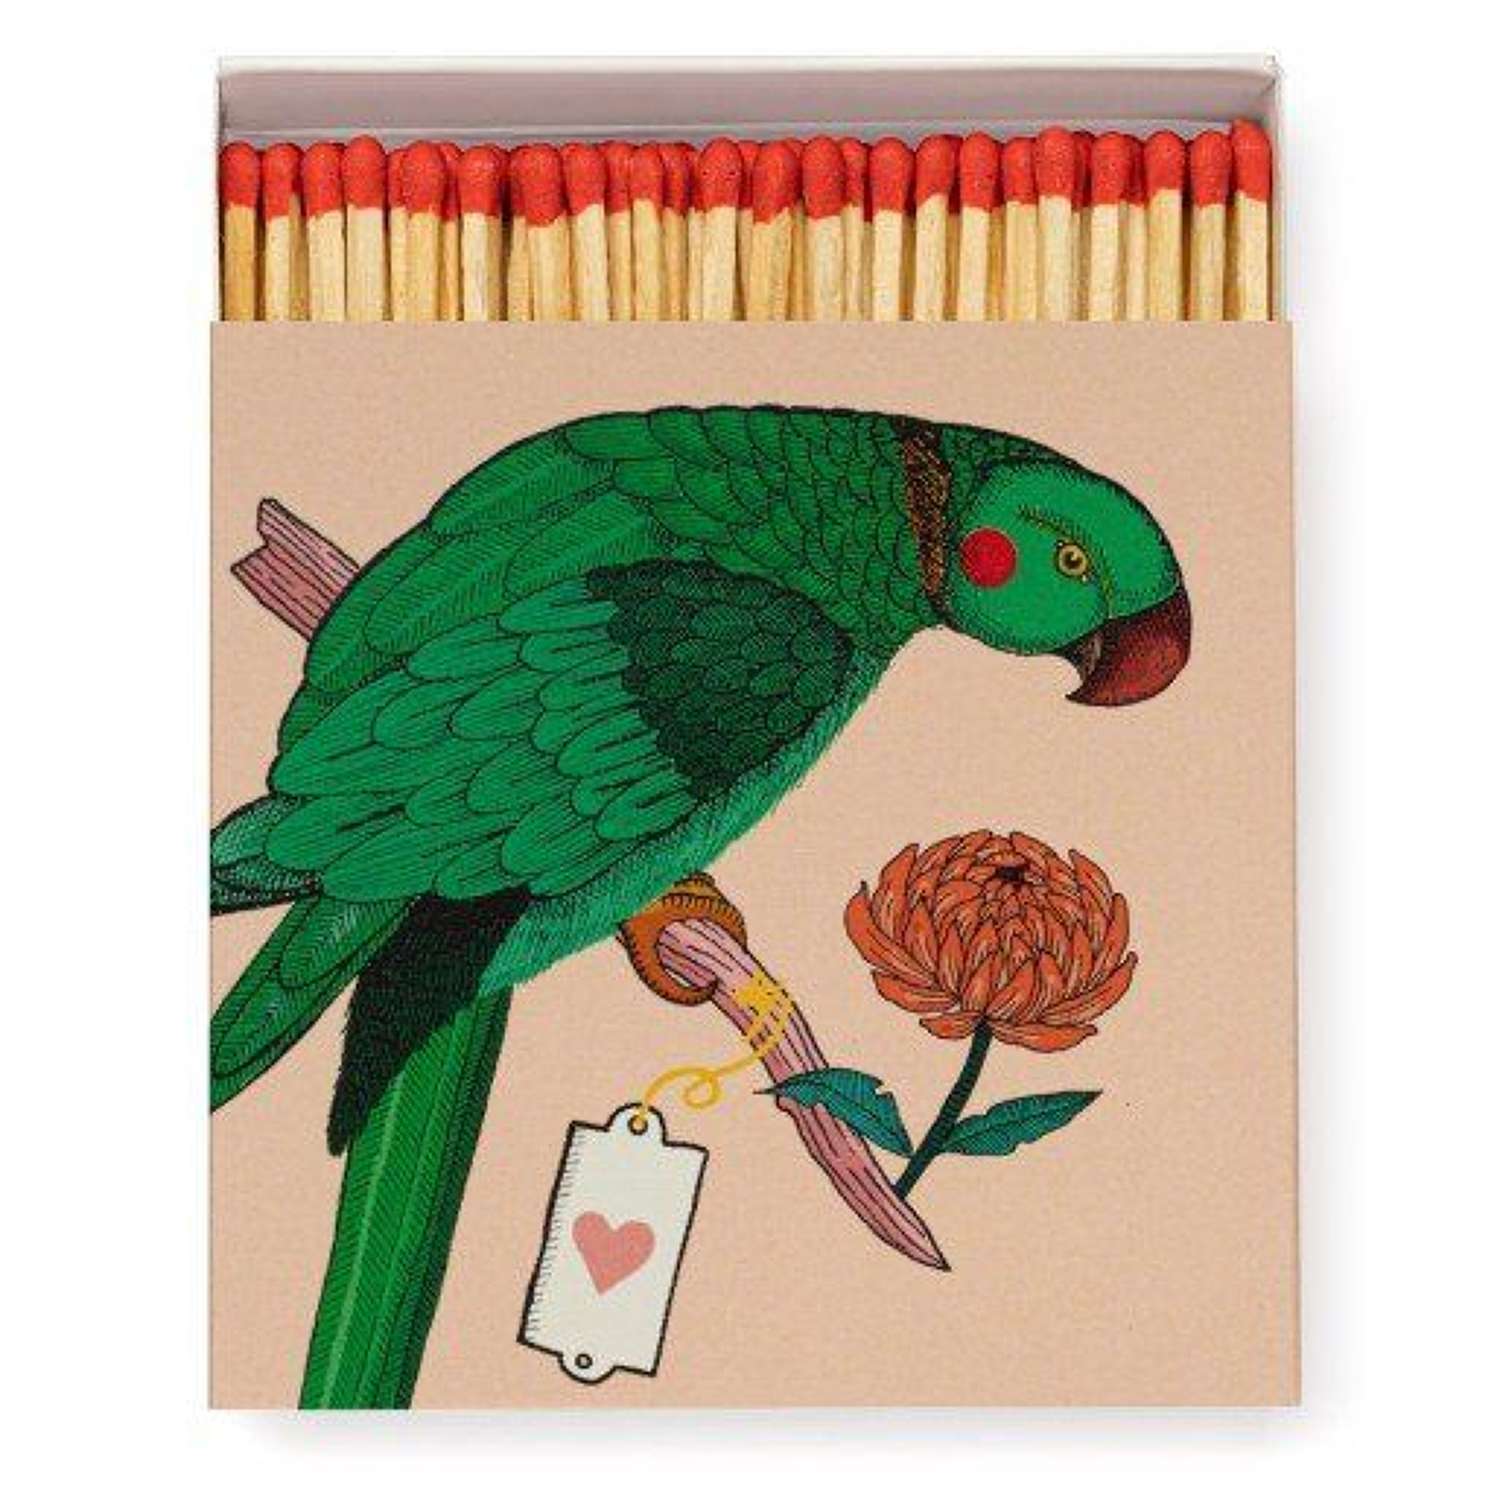 Archivist Ariane Parrot Matches